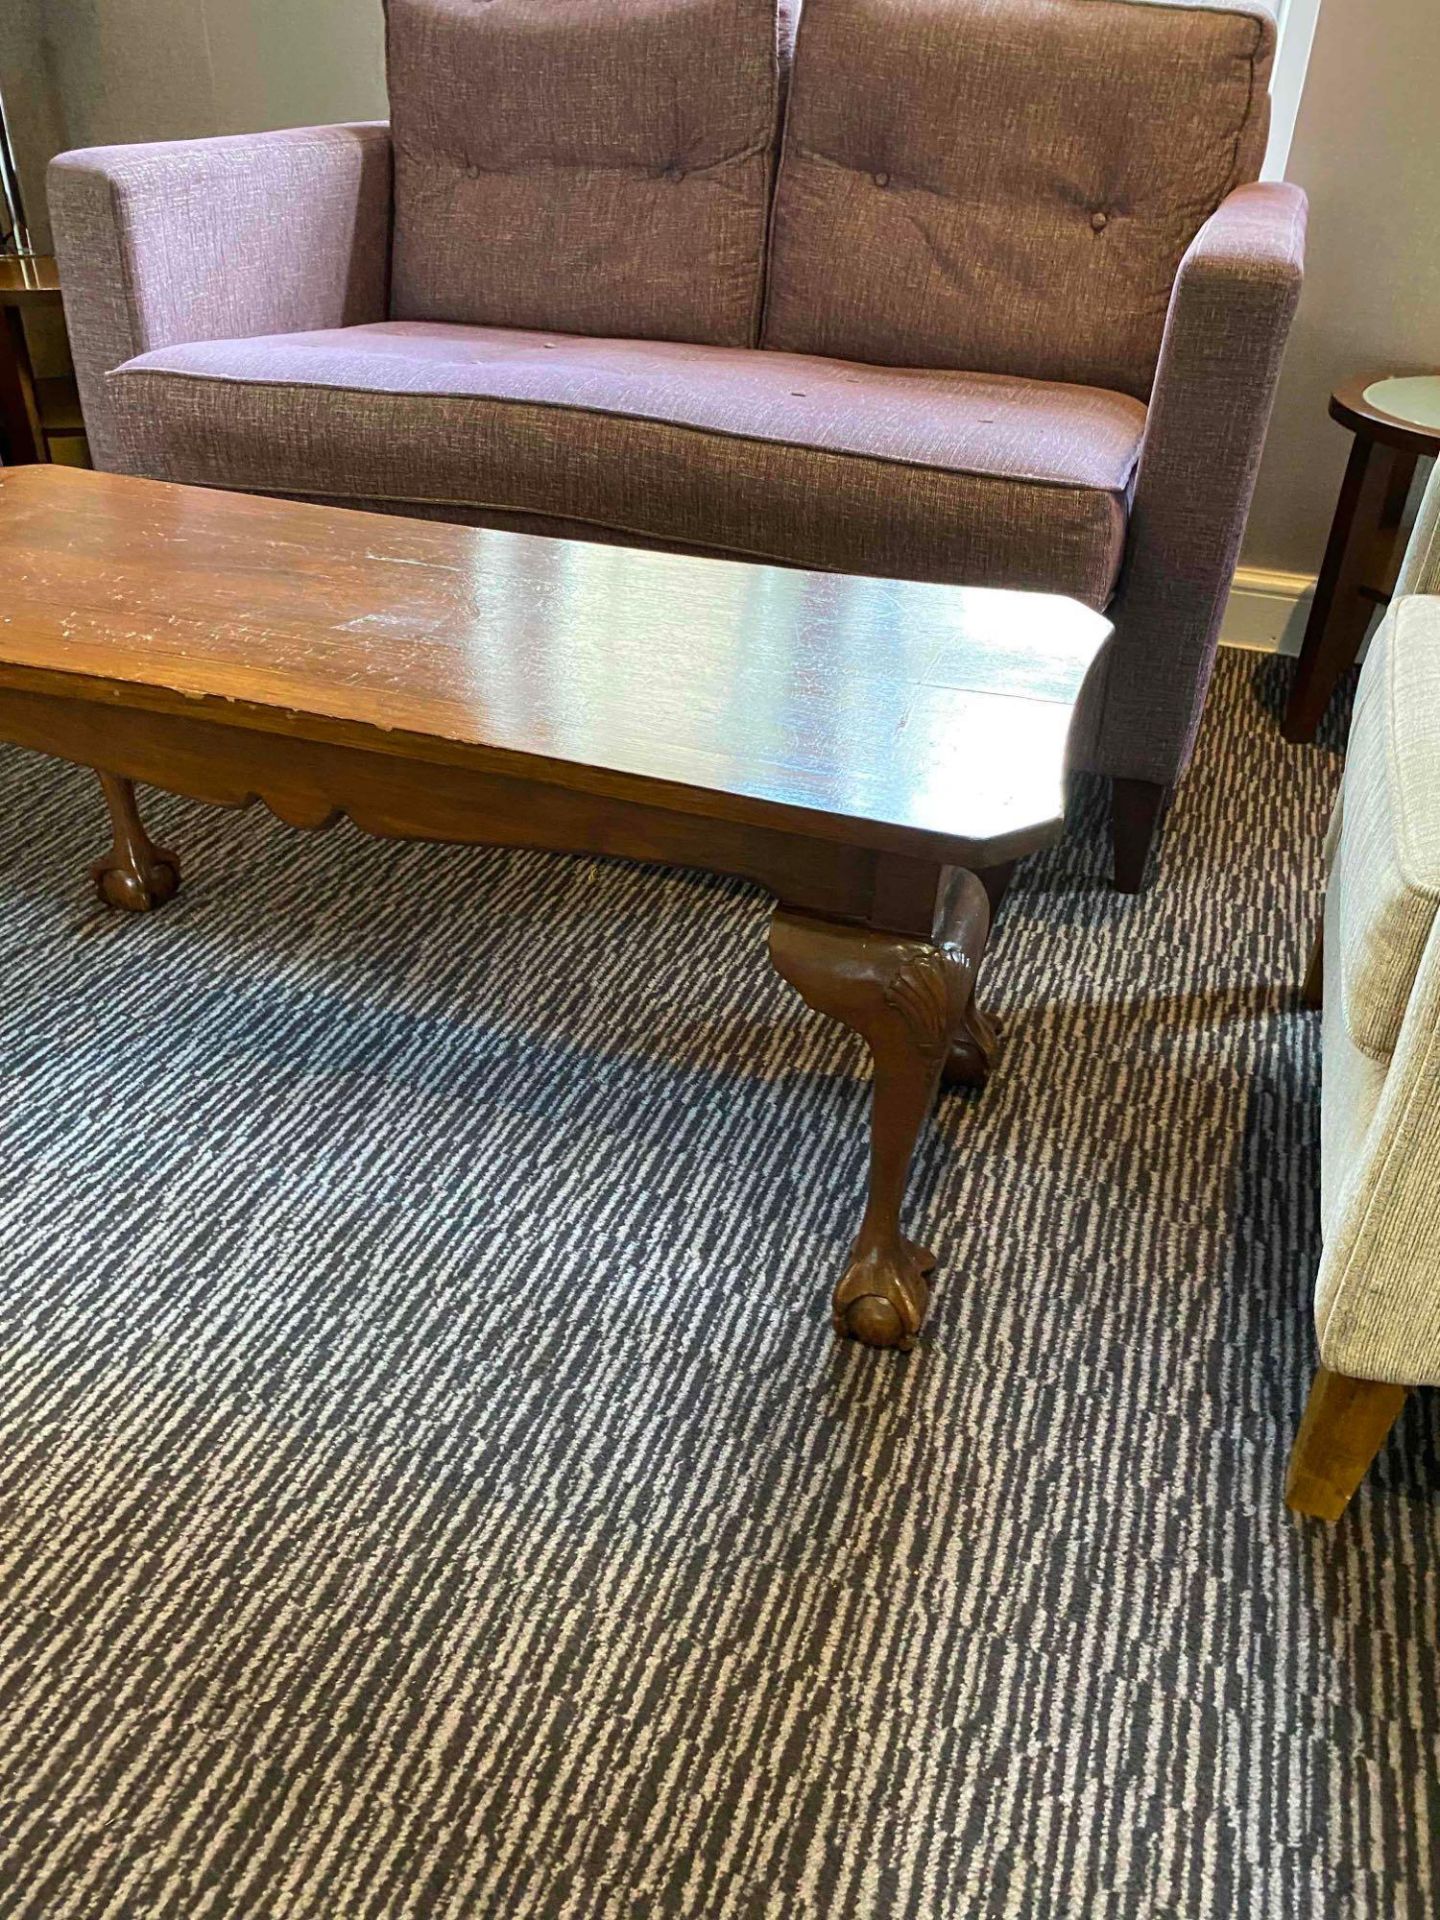 Rectangular Coffee Table Darkwood1050 x 430 x 450 (The Lounge ) - Image 2 of 2